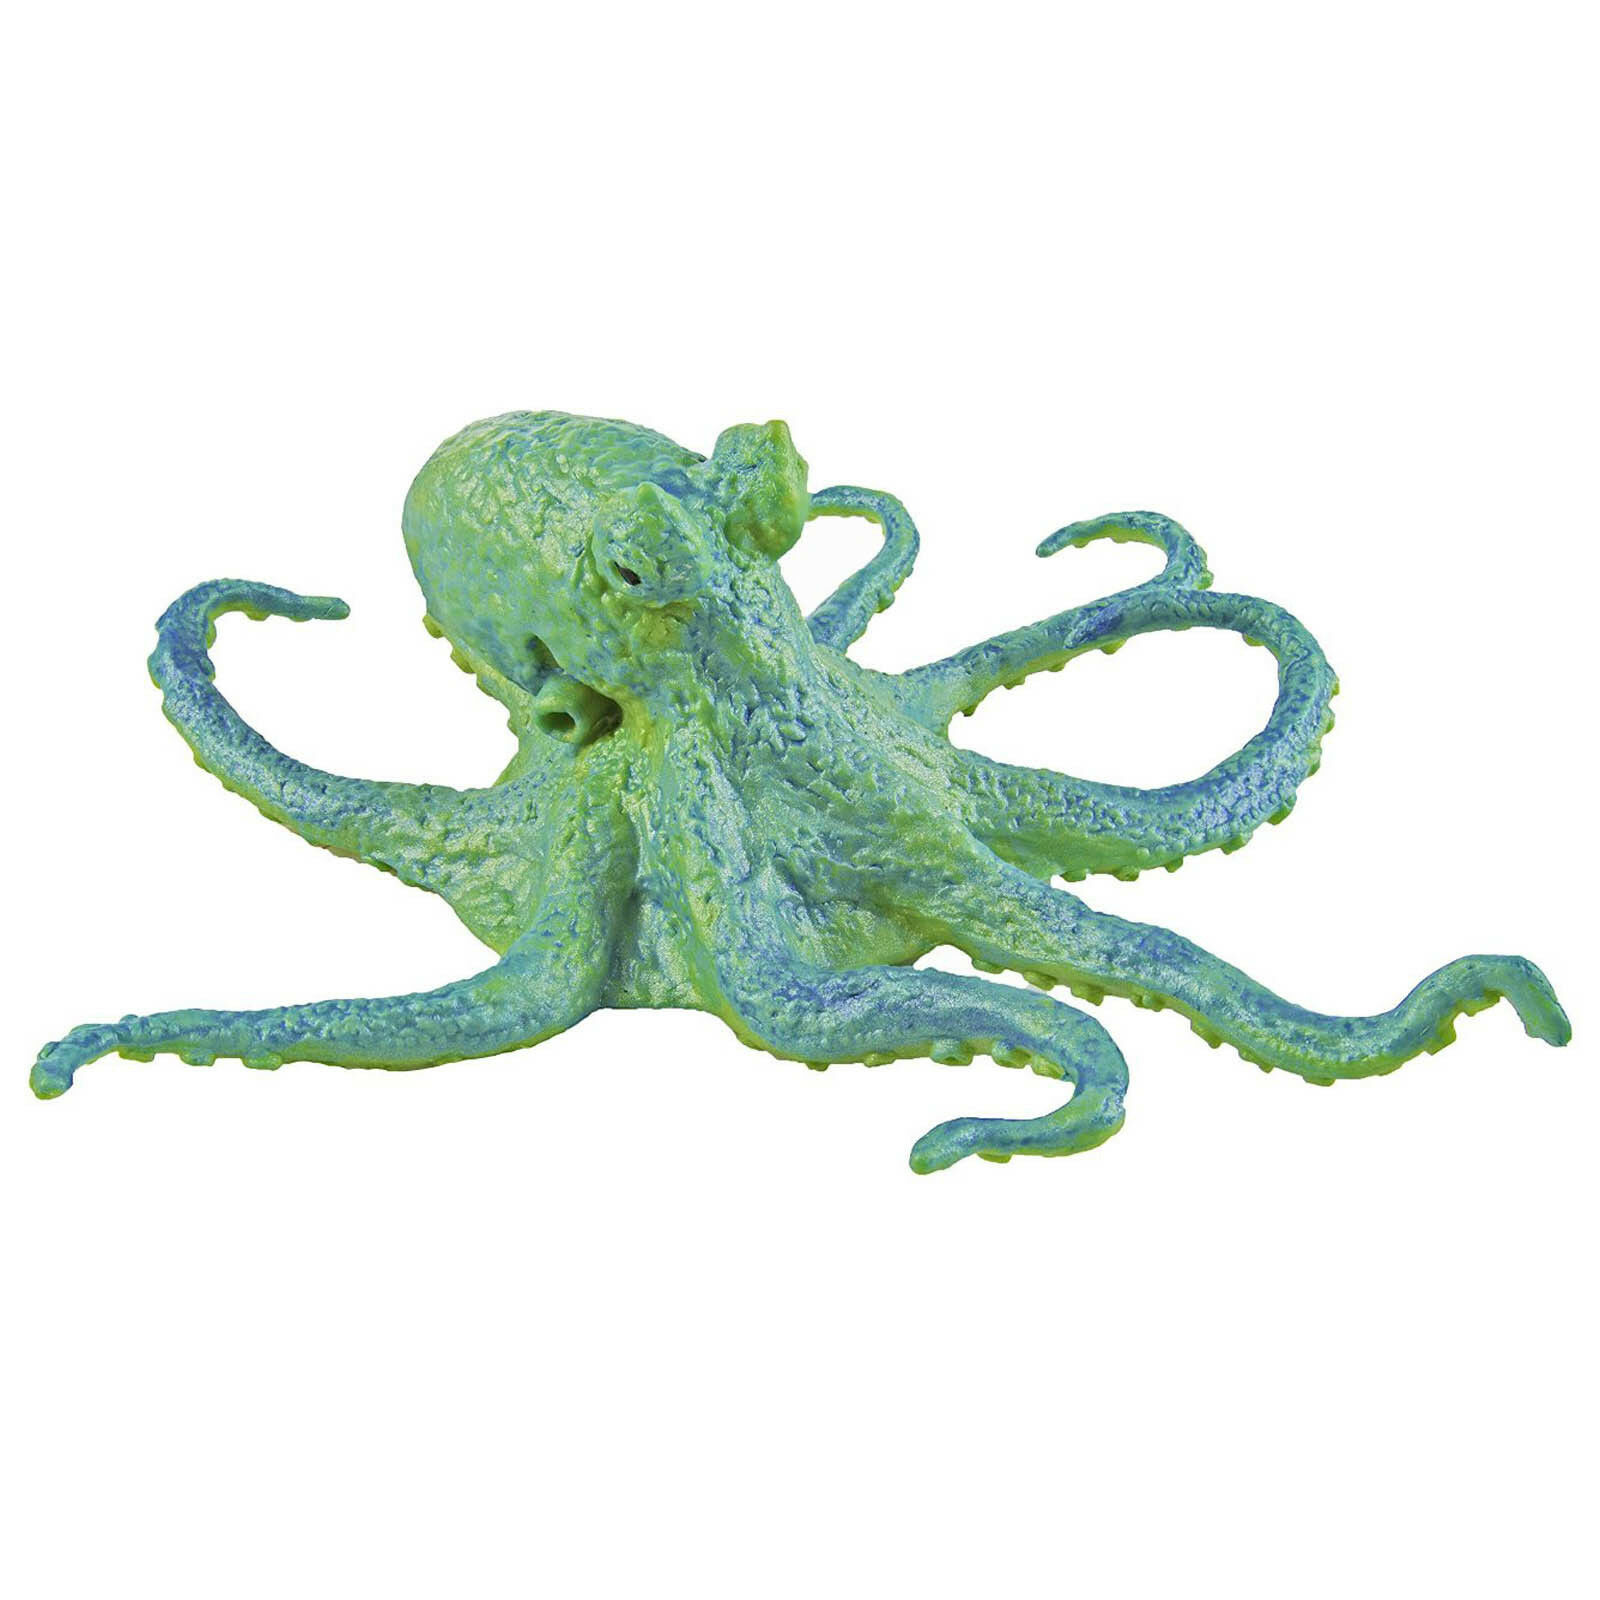 Octopus Green Sea Life Figure Safari Ltd New Toys Educational Figurine Creature